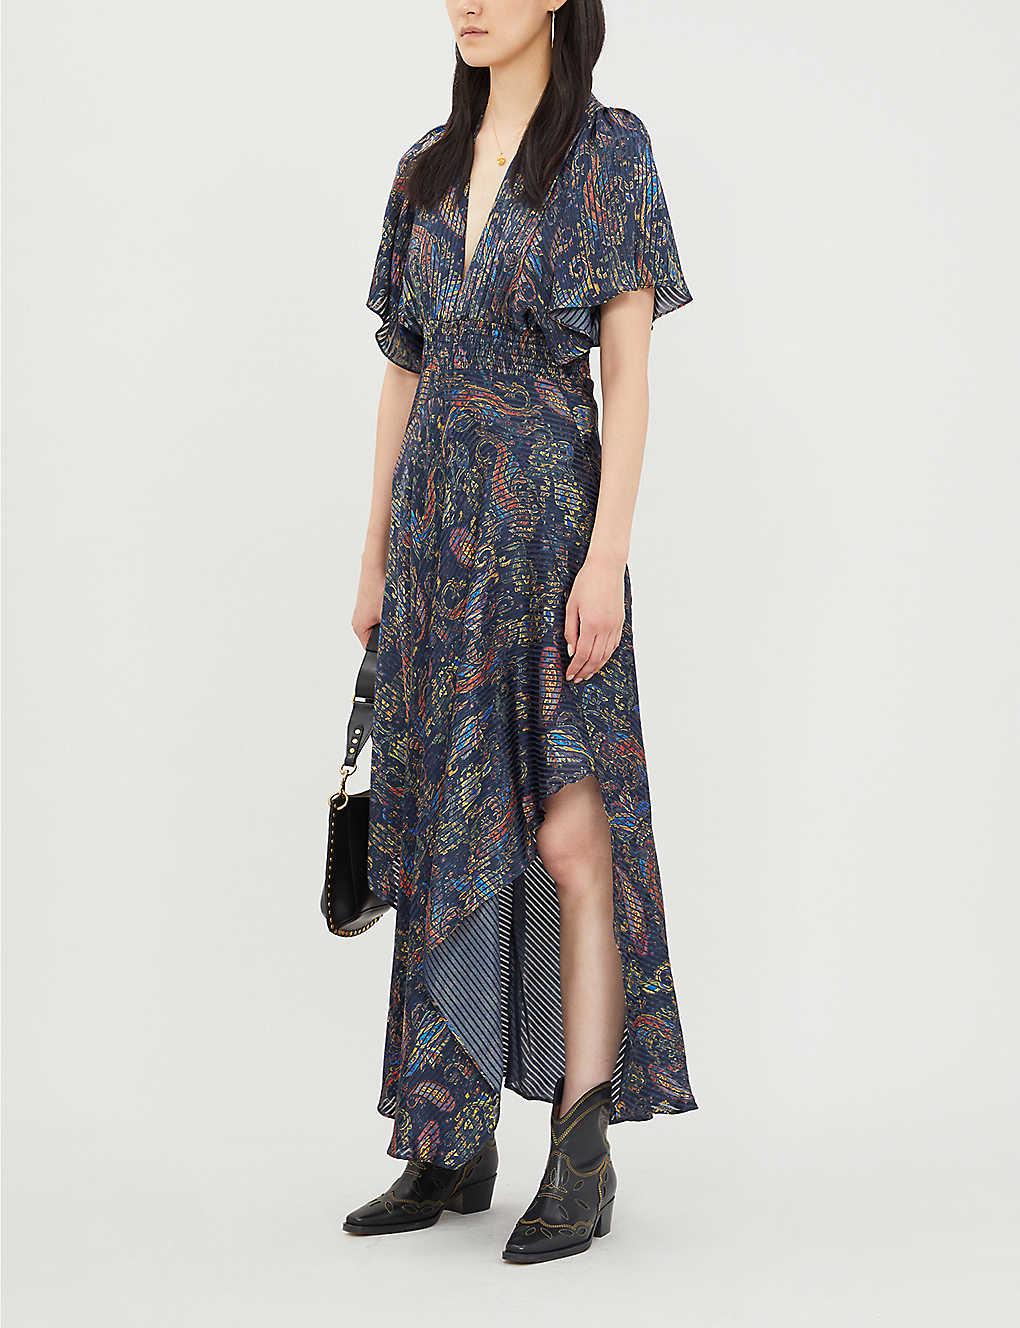 Maje Rachel Paisley-print Satin Dress in Blue | Lyst